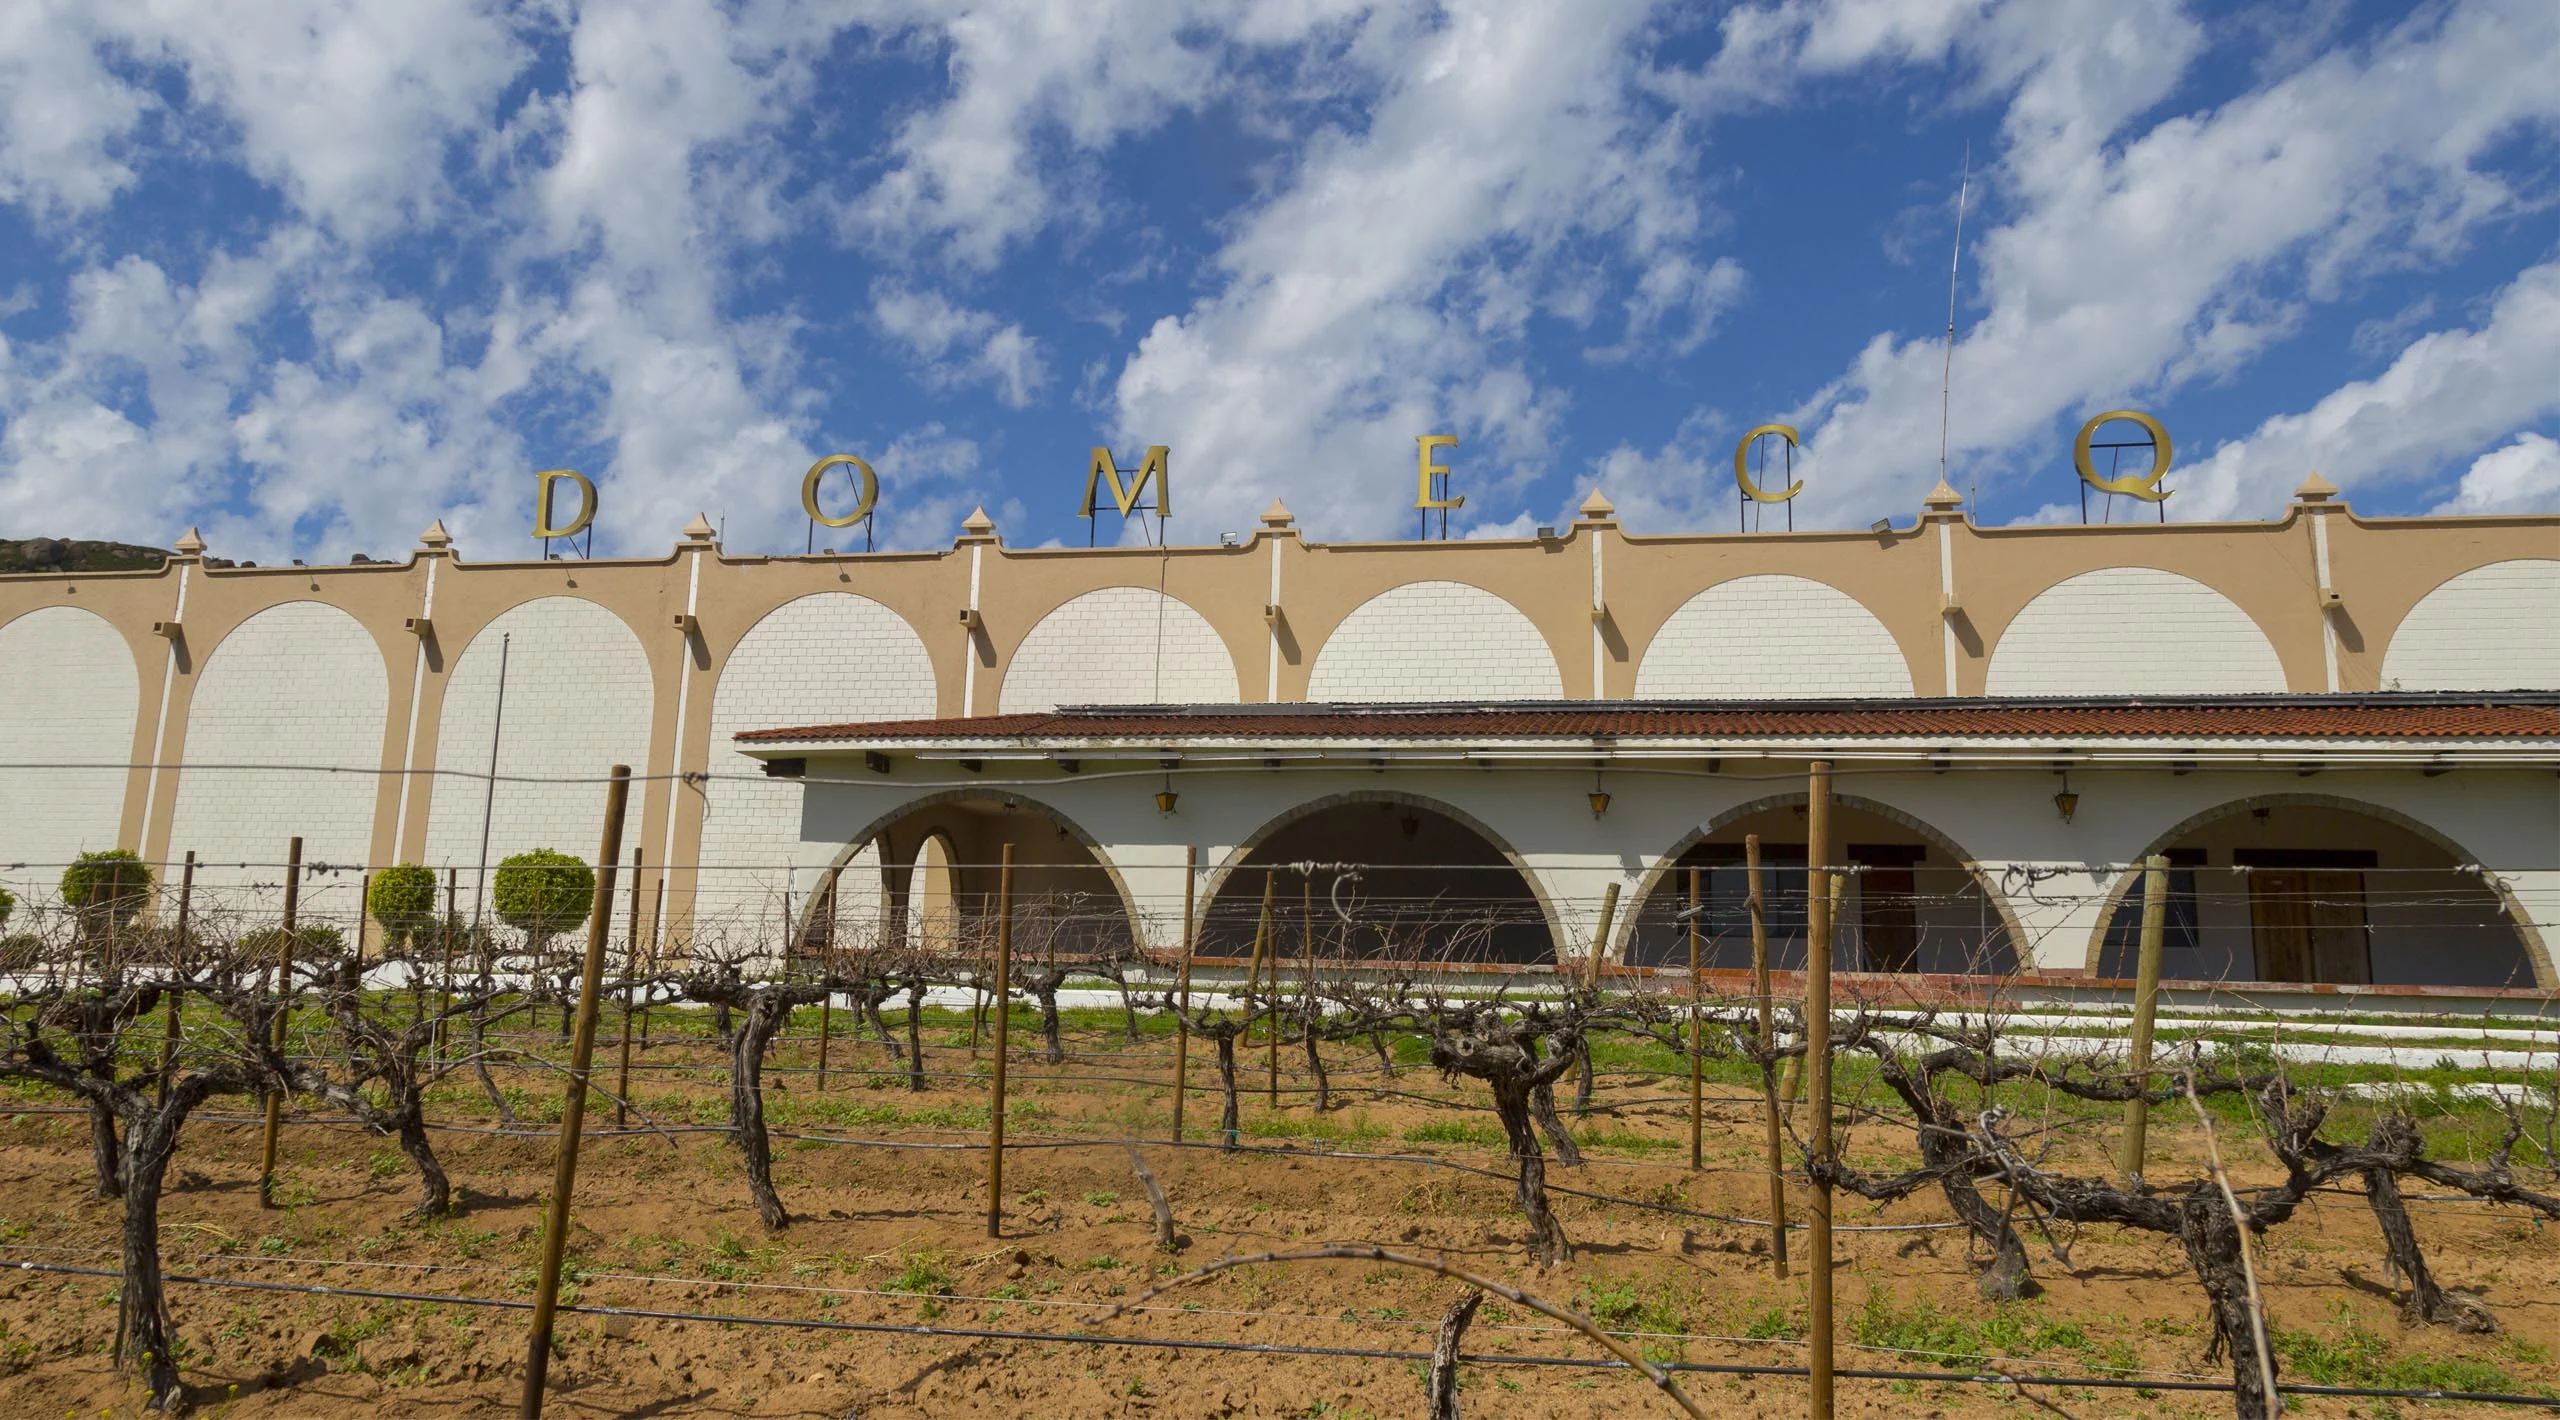 Domecq: 5 décadas de historia vinícola presentes en Food&Wine Festival